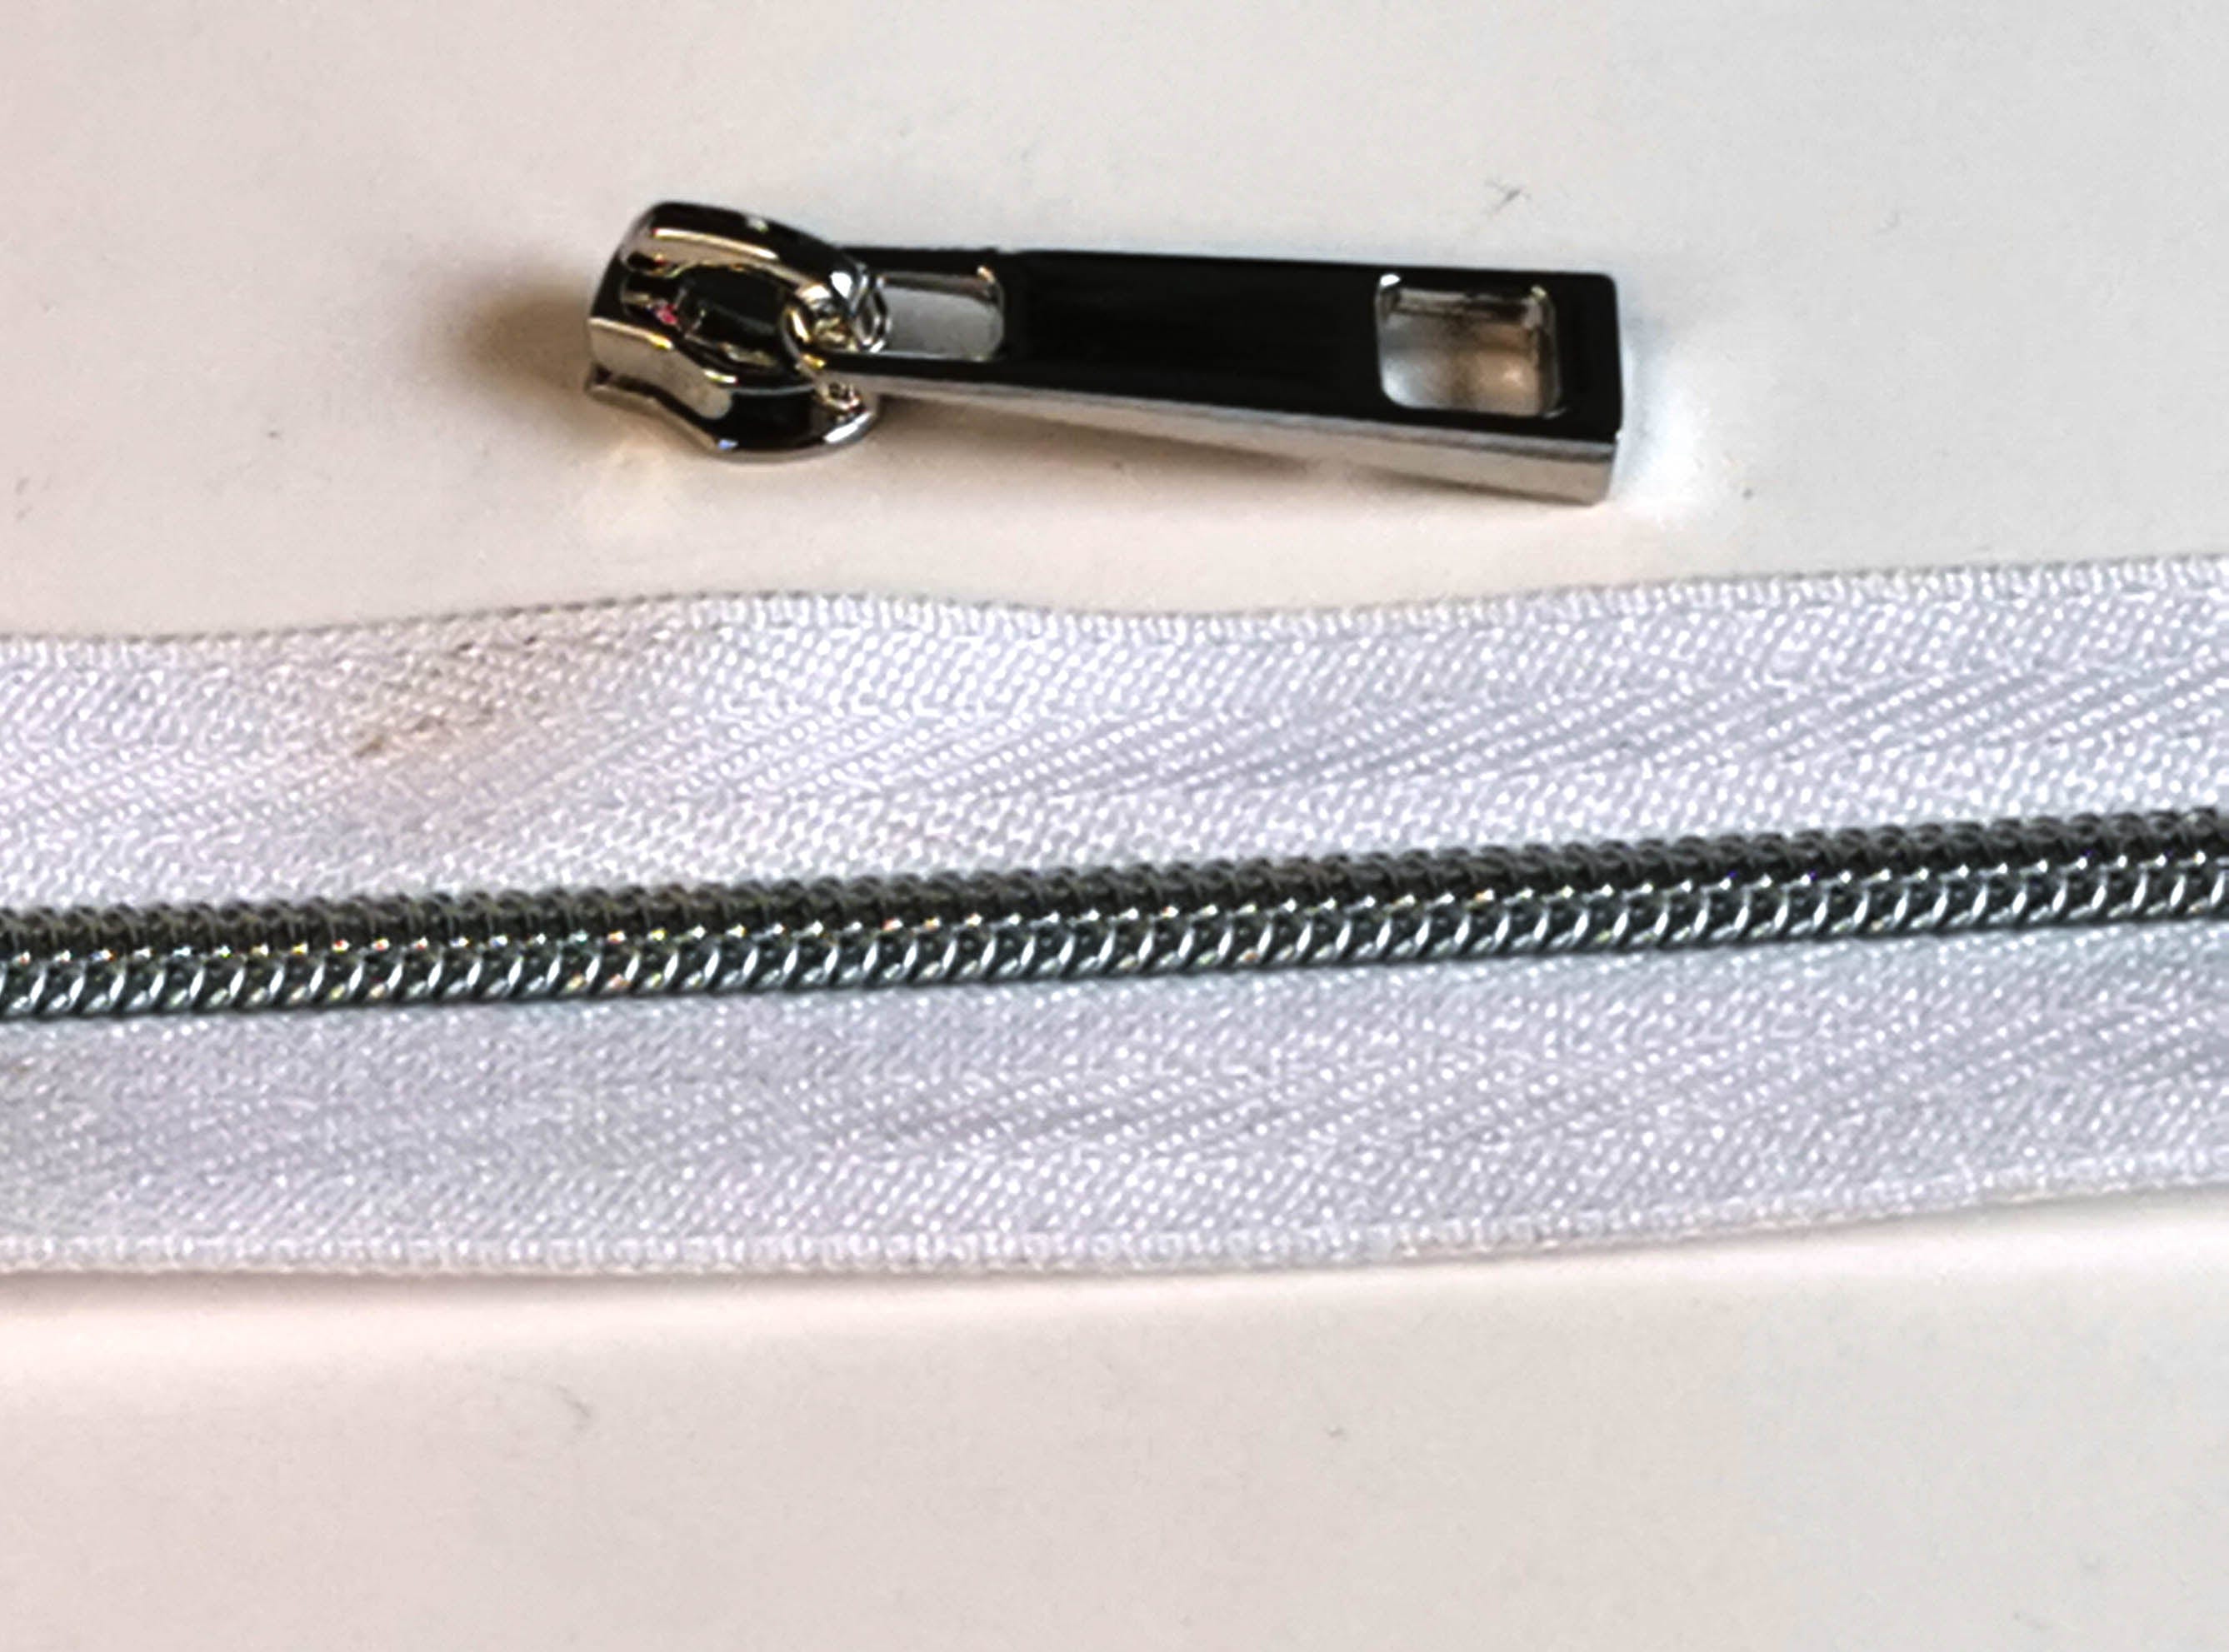 Zipper by the Yard (metre). 2.5m of #3 Zipper tape with 10 Zipper Sliders/Pullers - Kiwi Bagineers